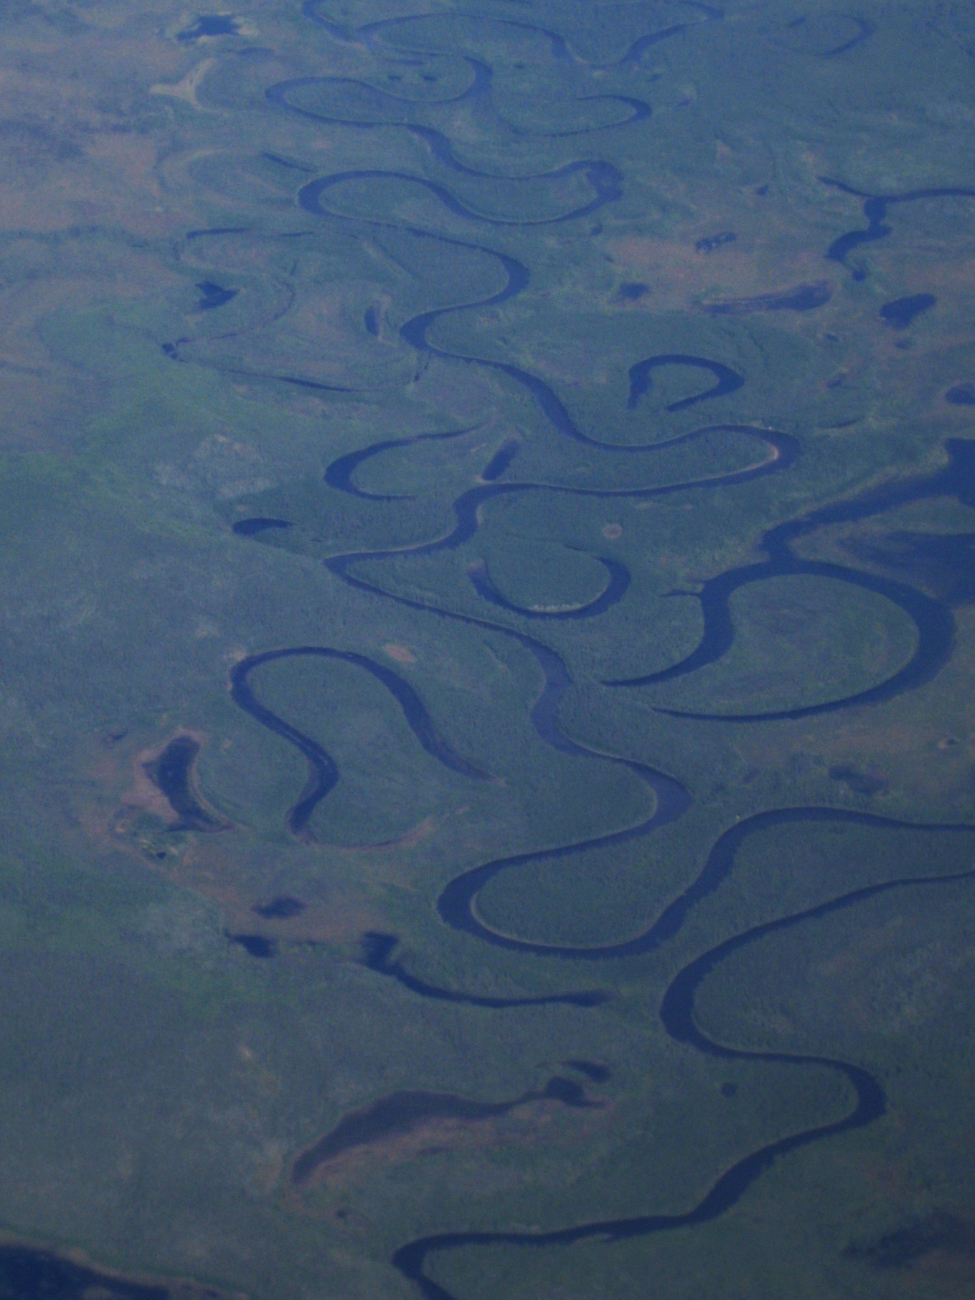 Oxbow lakes on Arctic tundra on a flight to Point Barrow